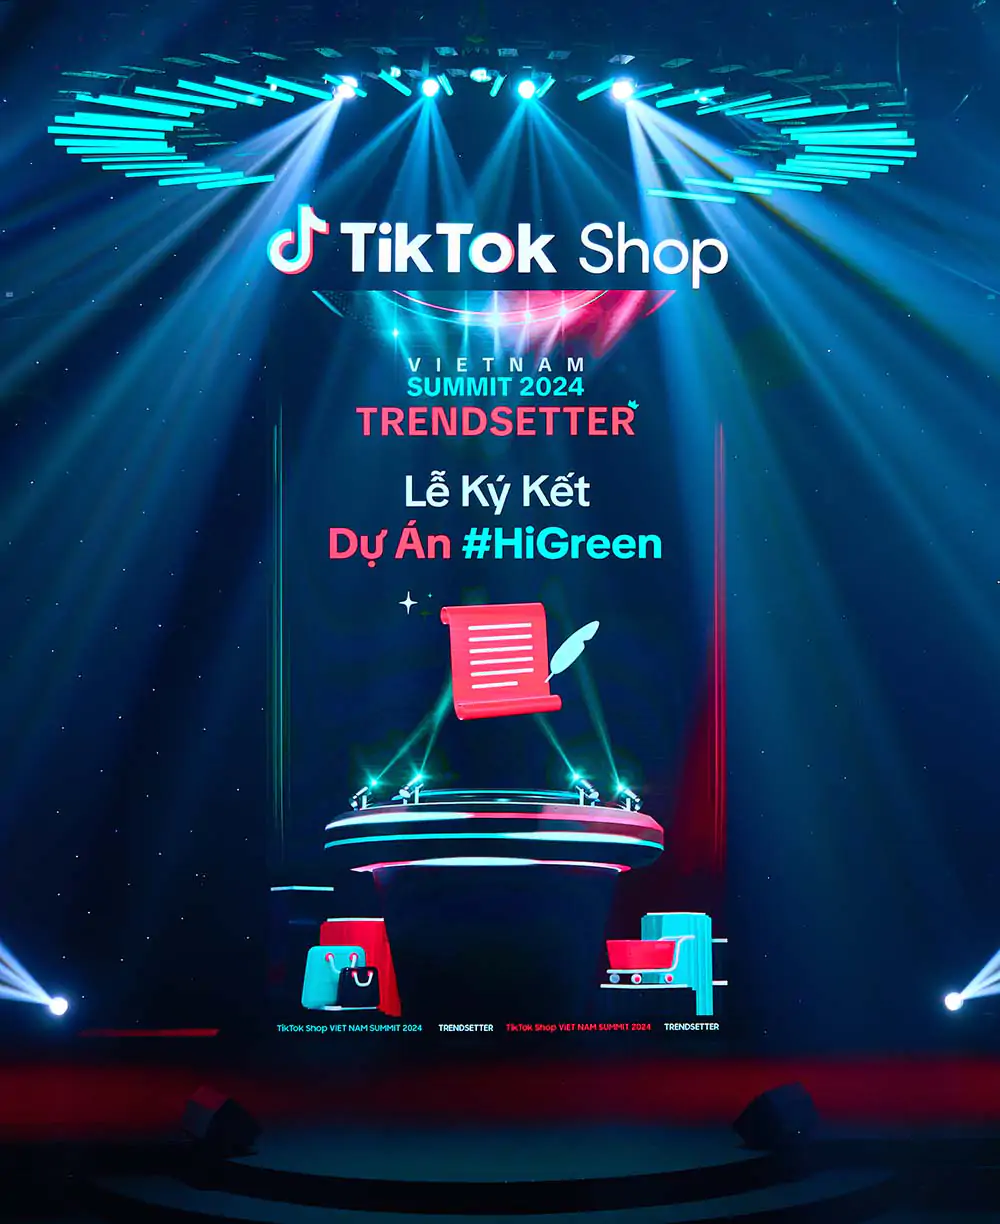 TikTok Shop Summit 2024: Ký kết dự án #HiGreen